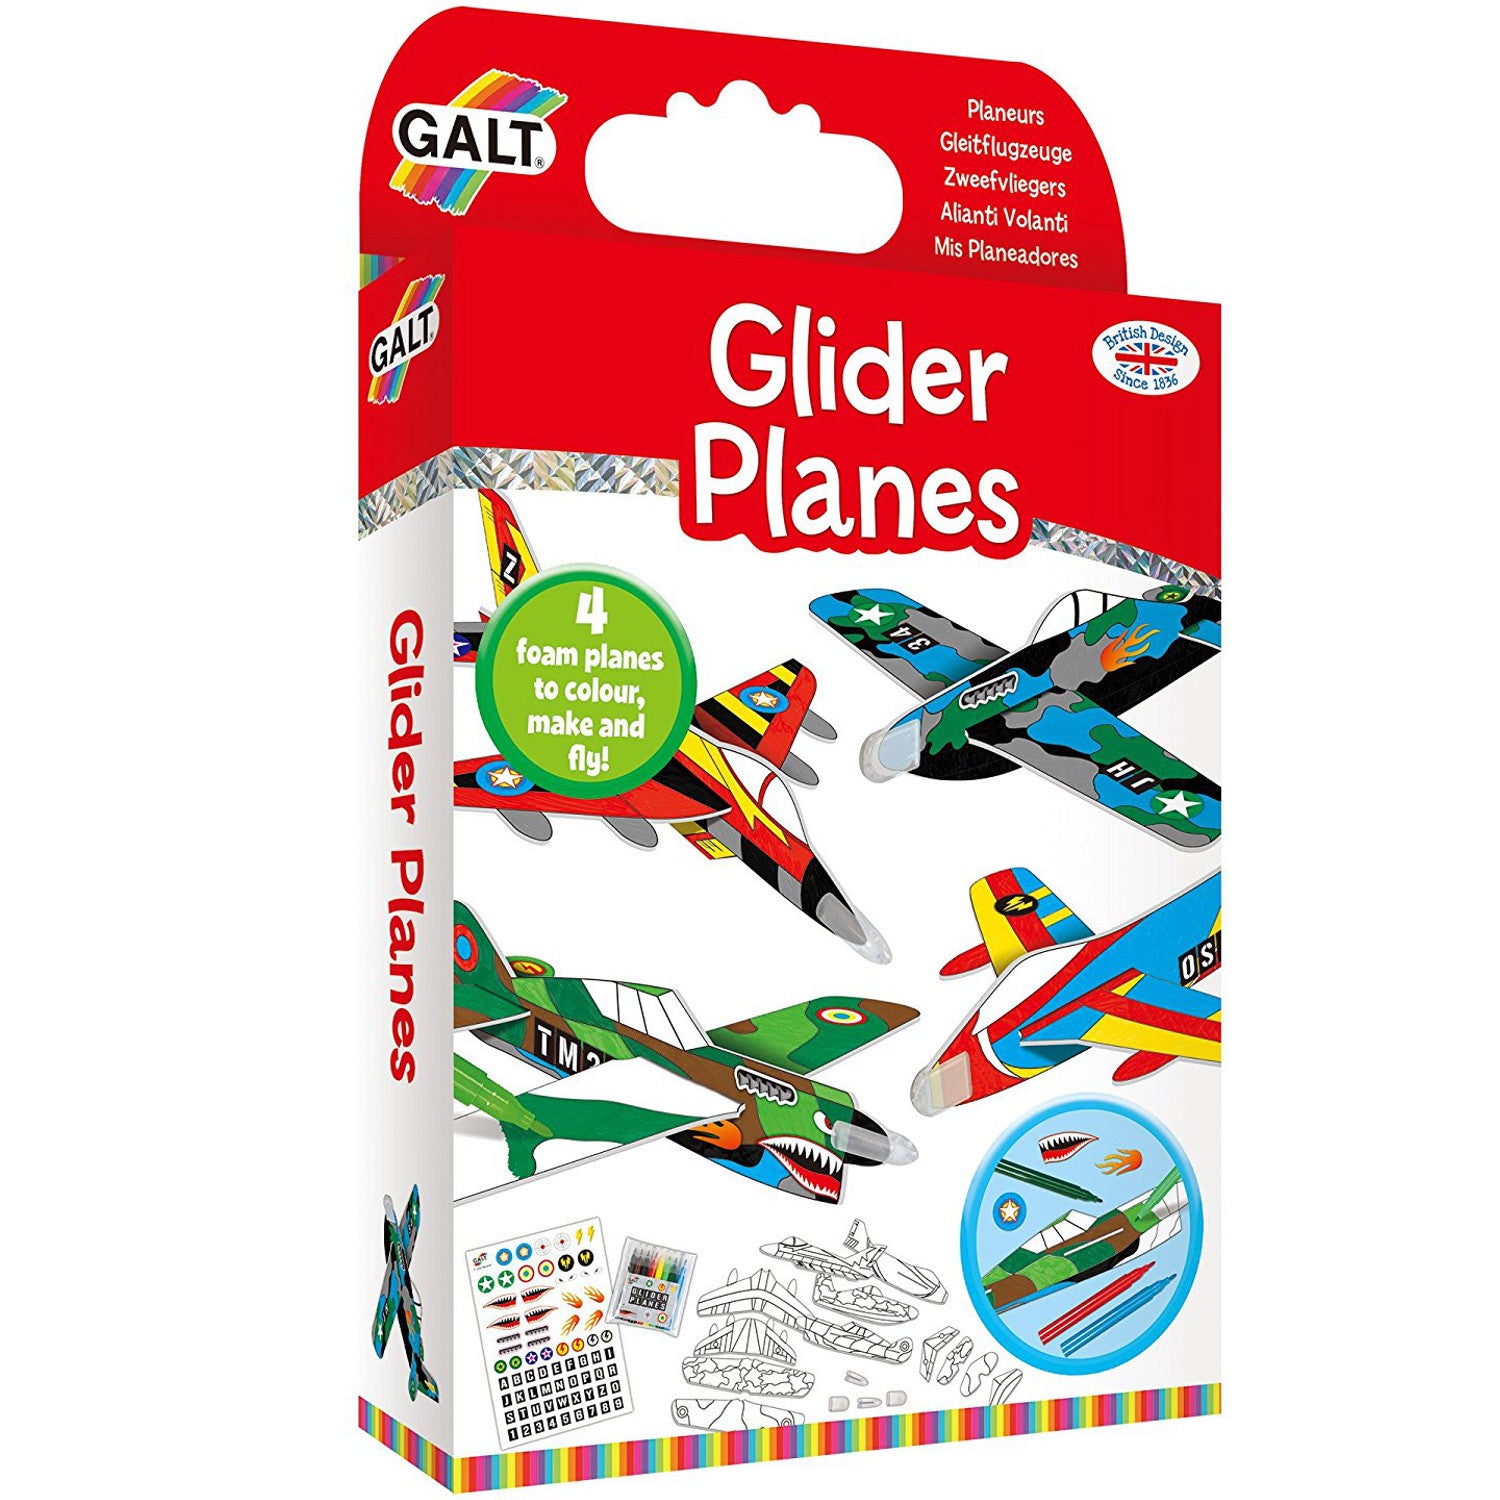 Galt Glider Planes - K and K Creative Toys